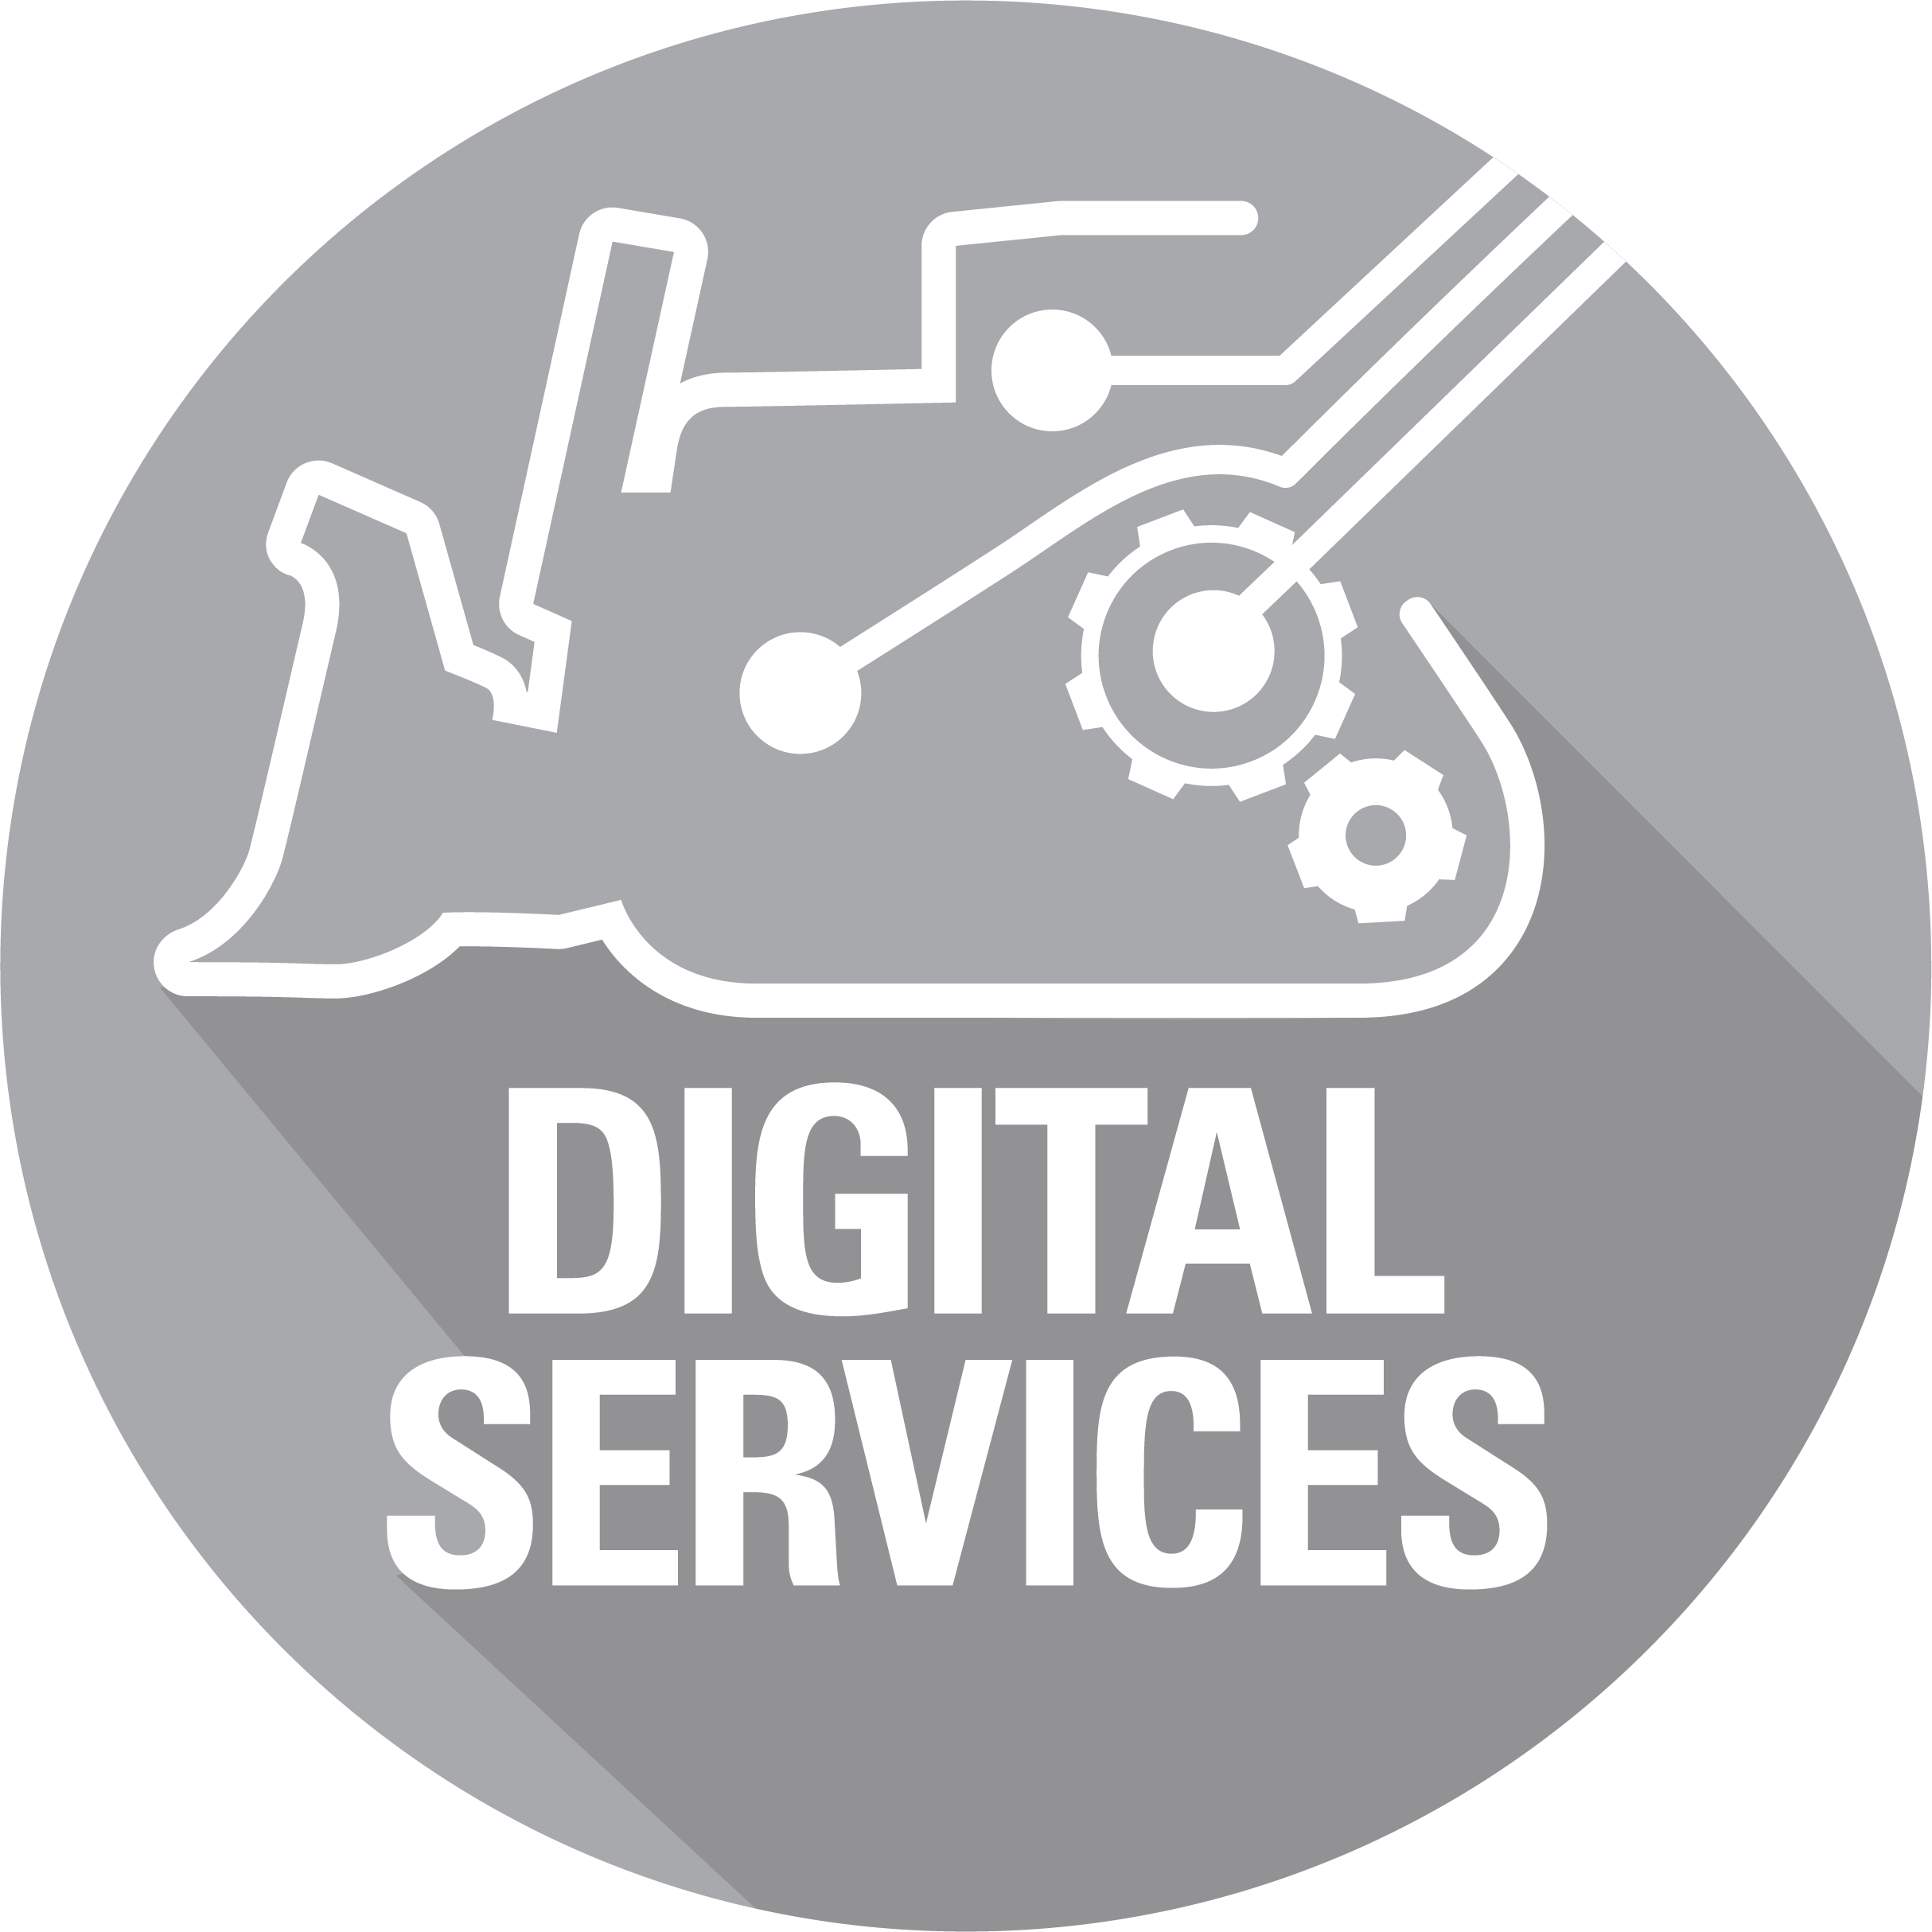 Digital Services's thumbnail image'